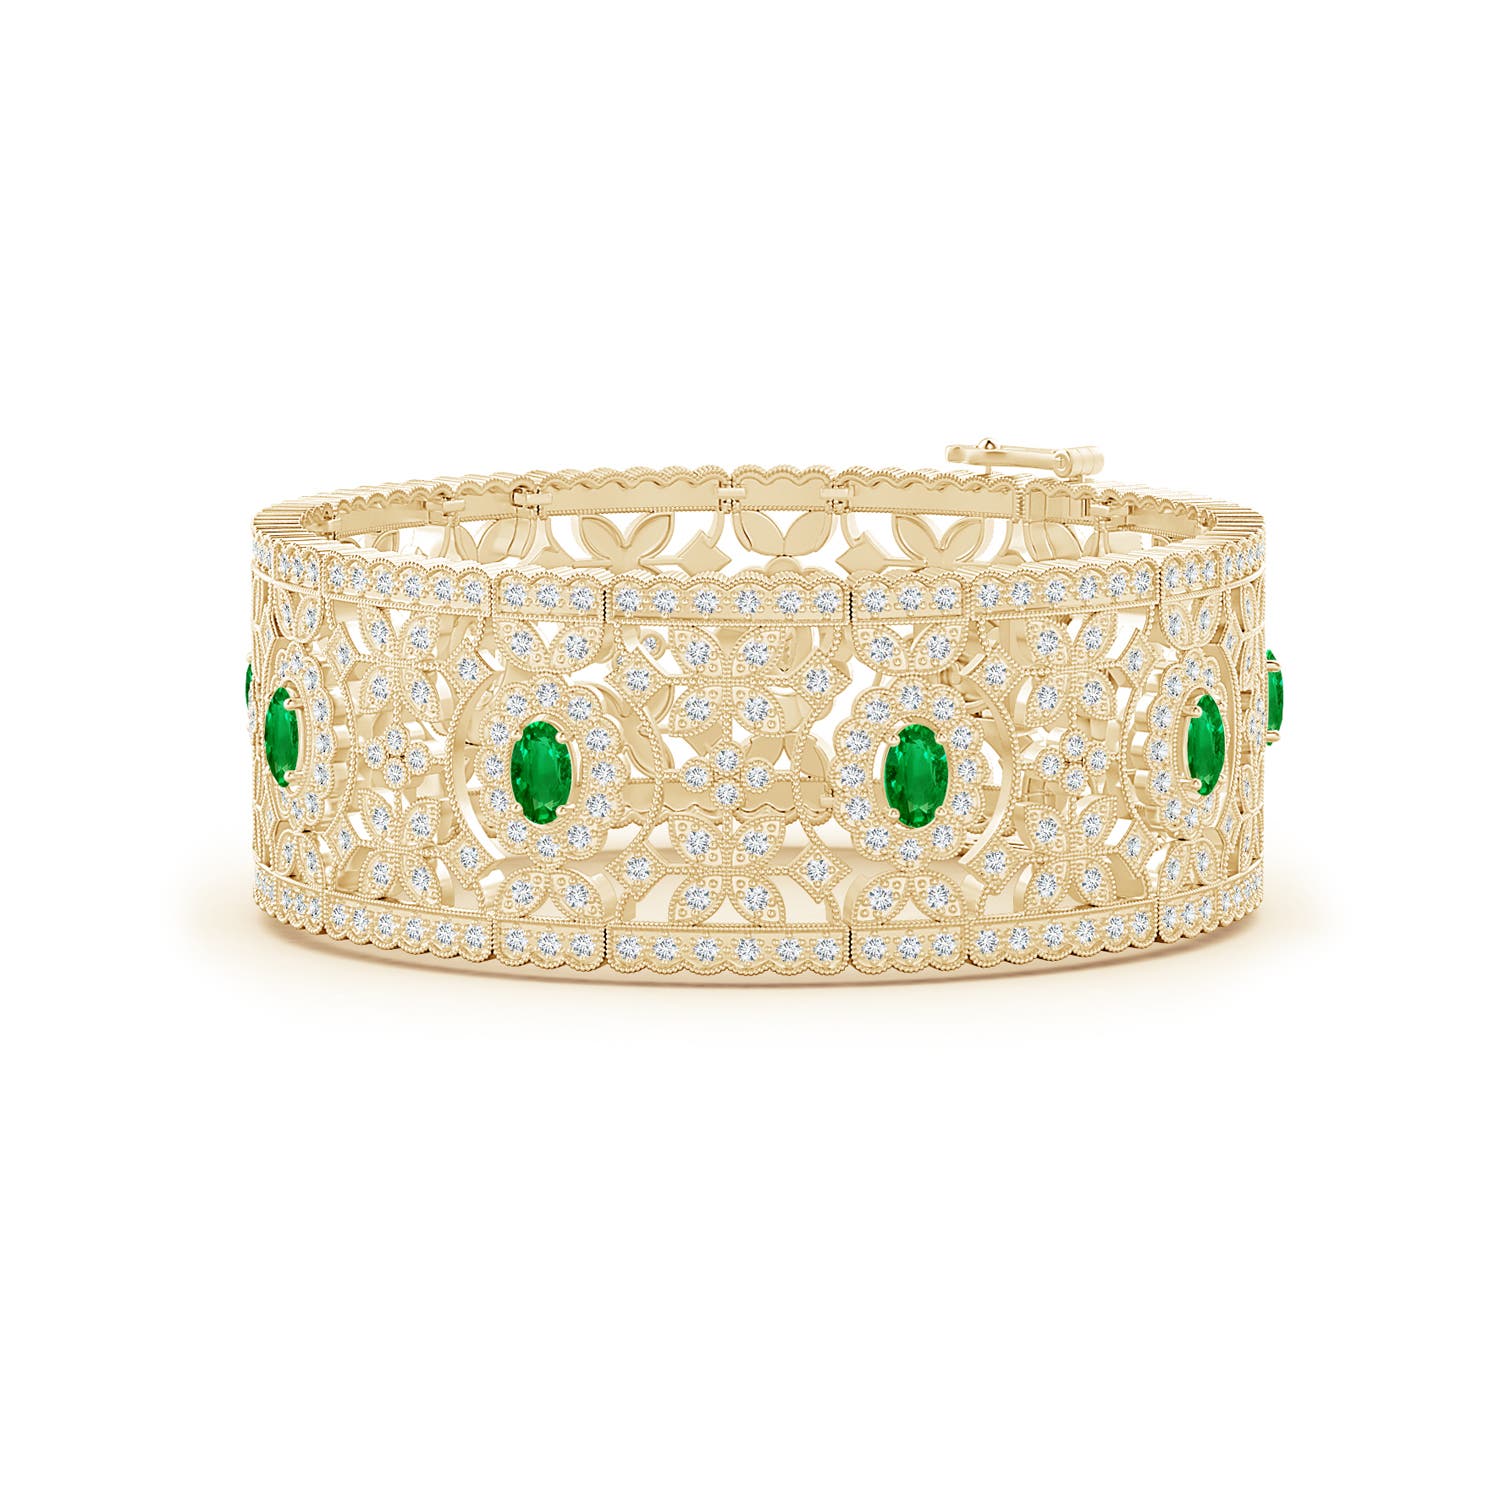 Sri Jagdamaba Pearls 22k (916) Yellow Gold And Emerald Bracelet For Women :  Amazon.in: Fashion